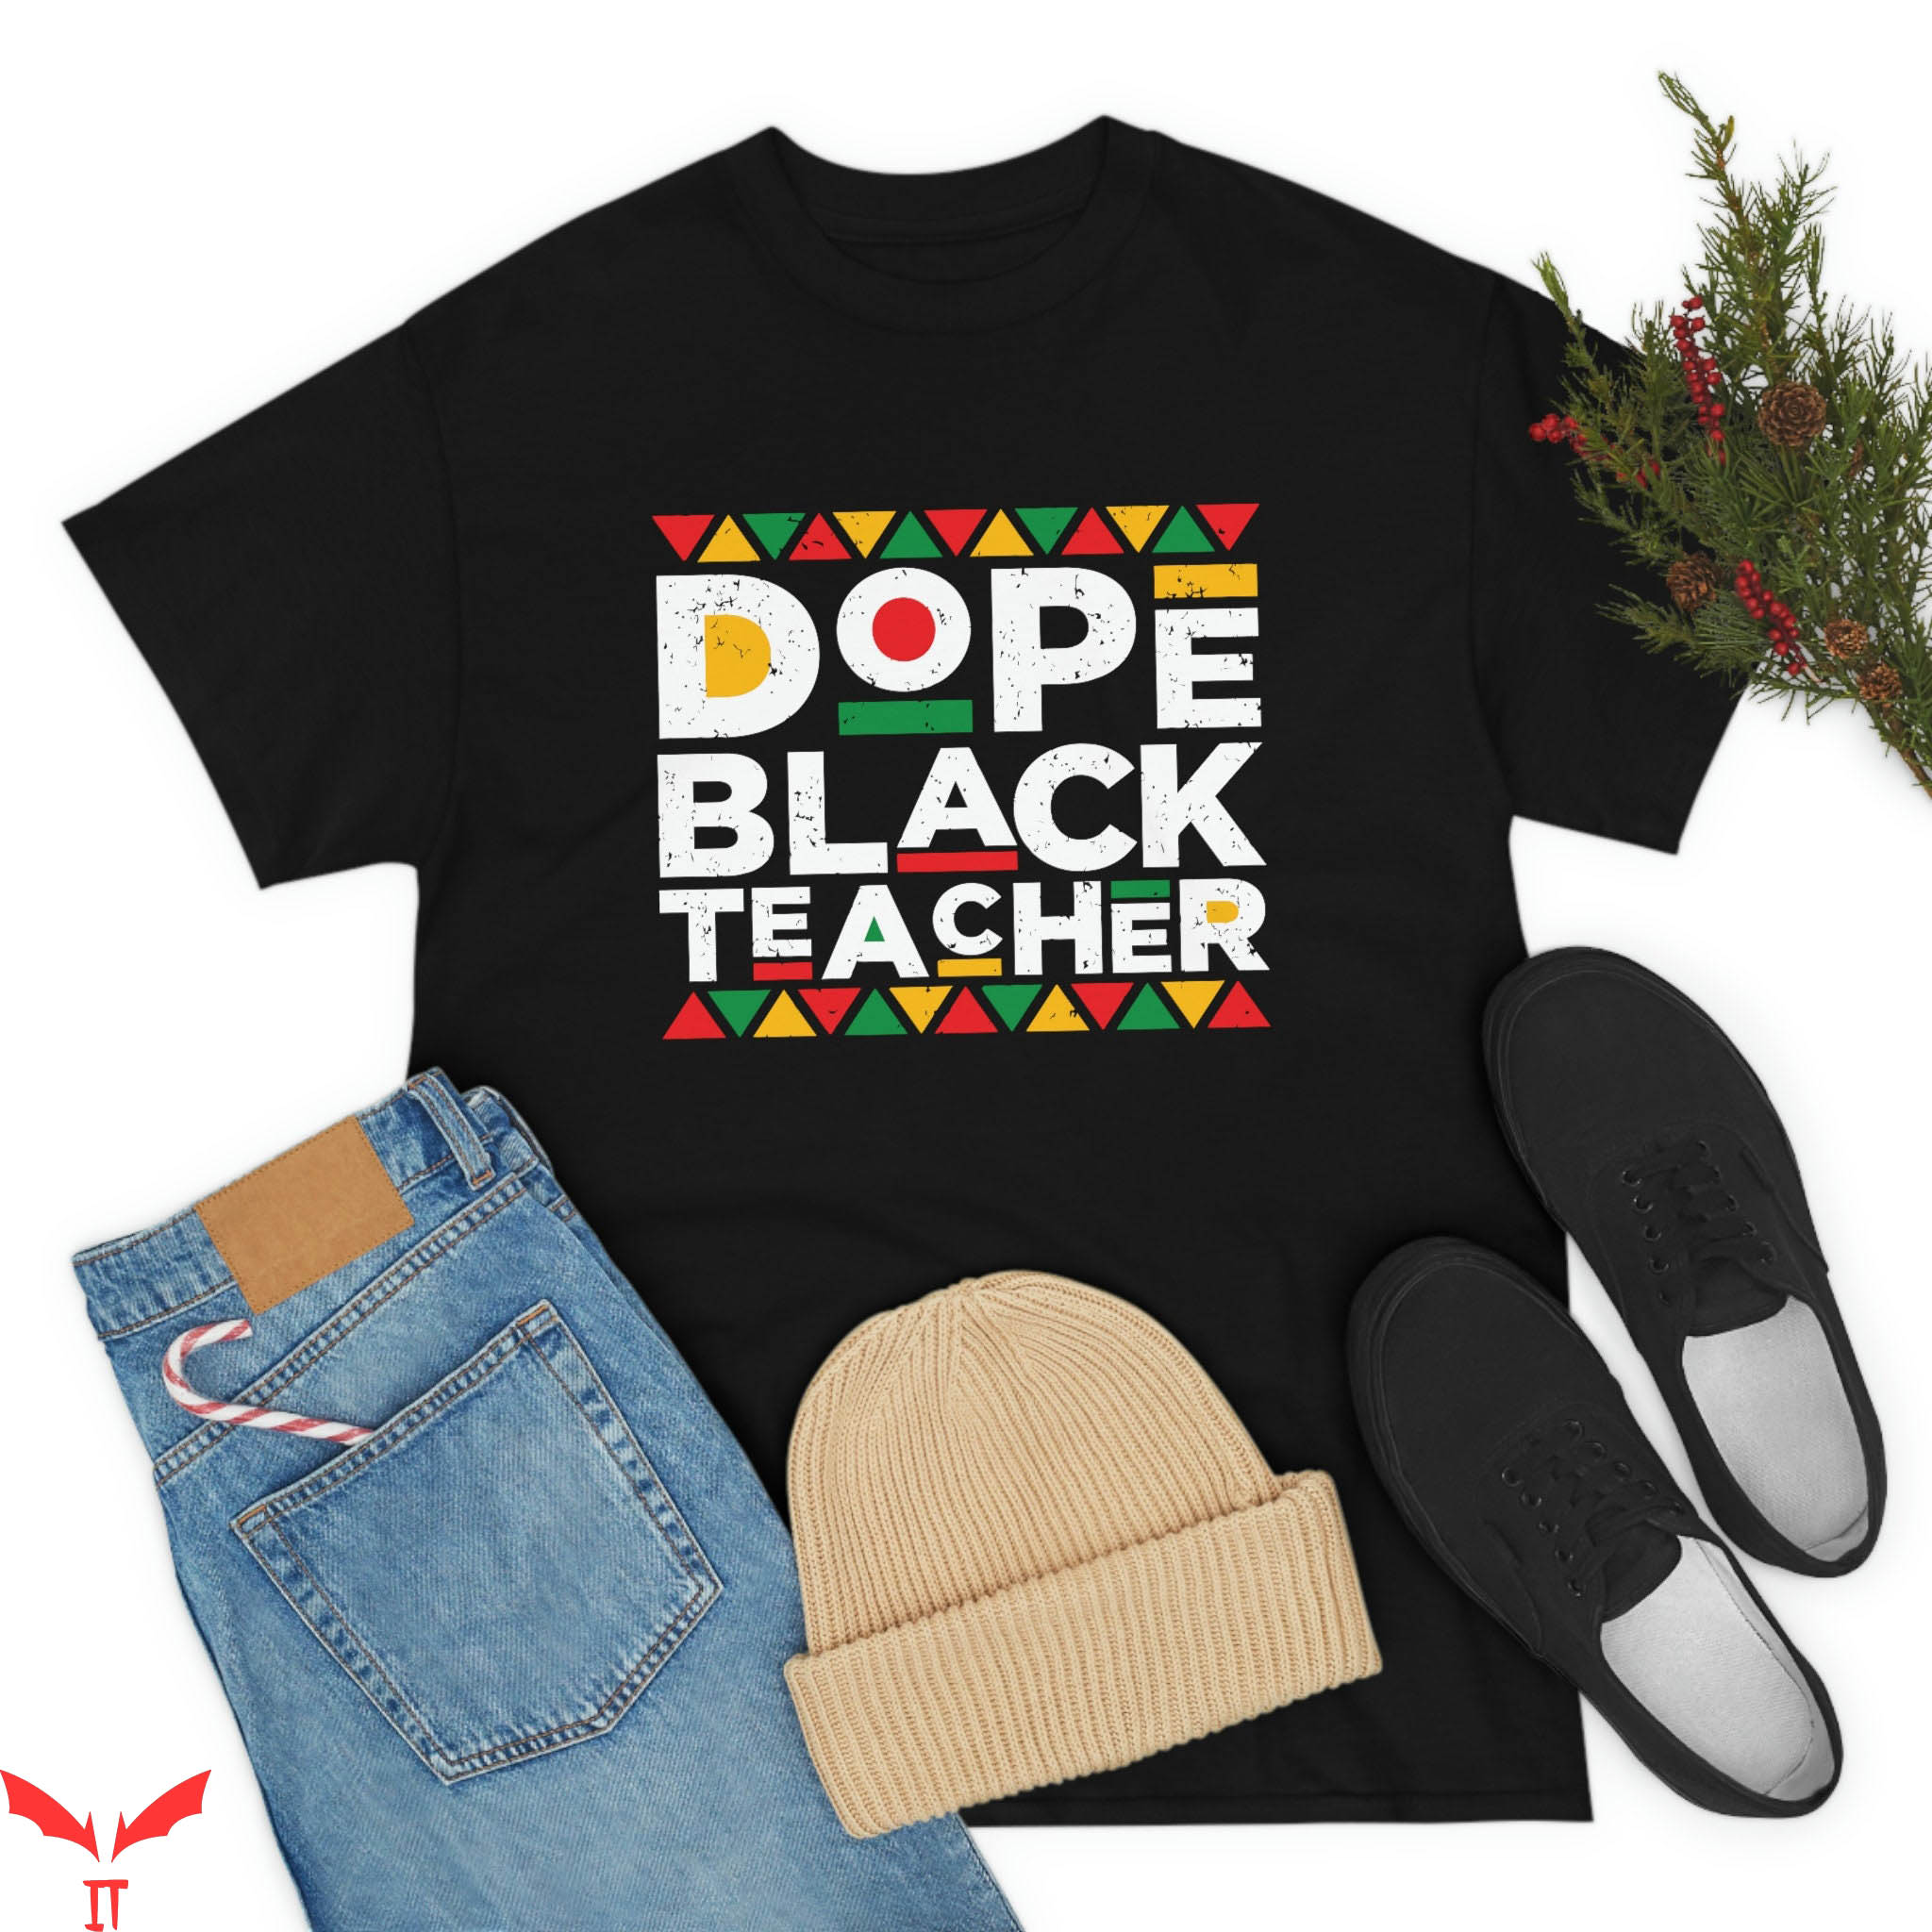 Black Teacher T-Shirt Black And Educated Tee Shirt